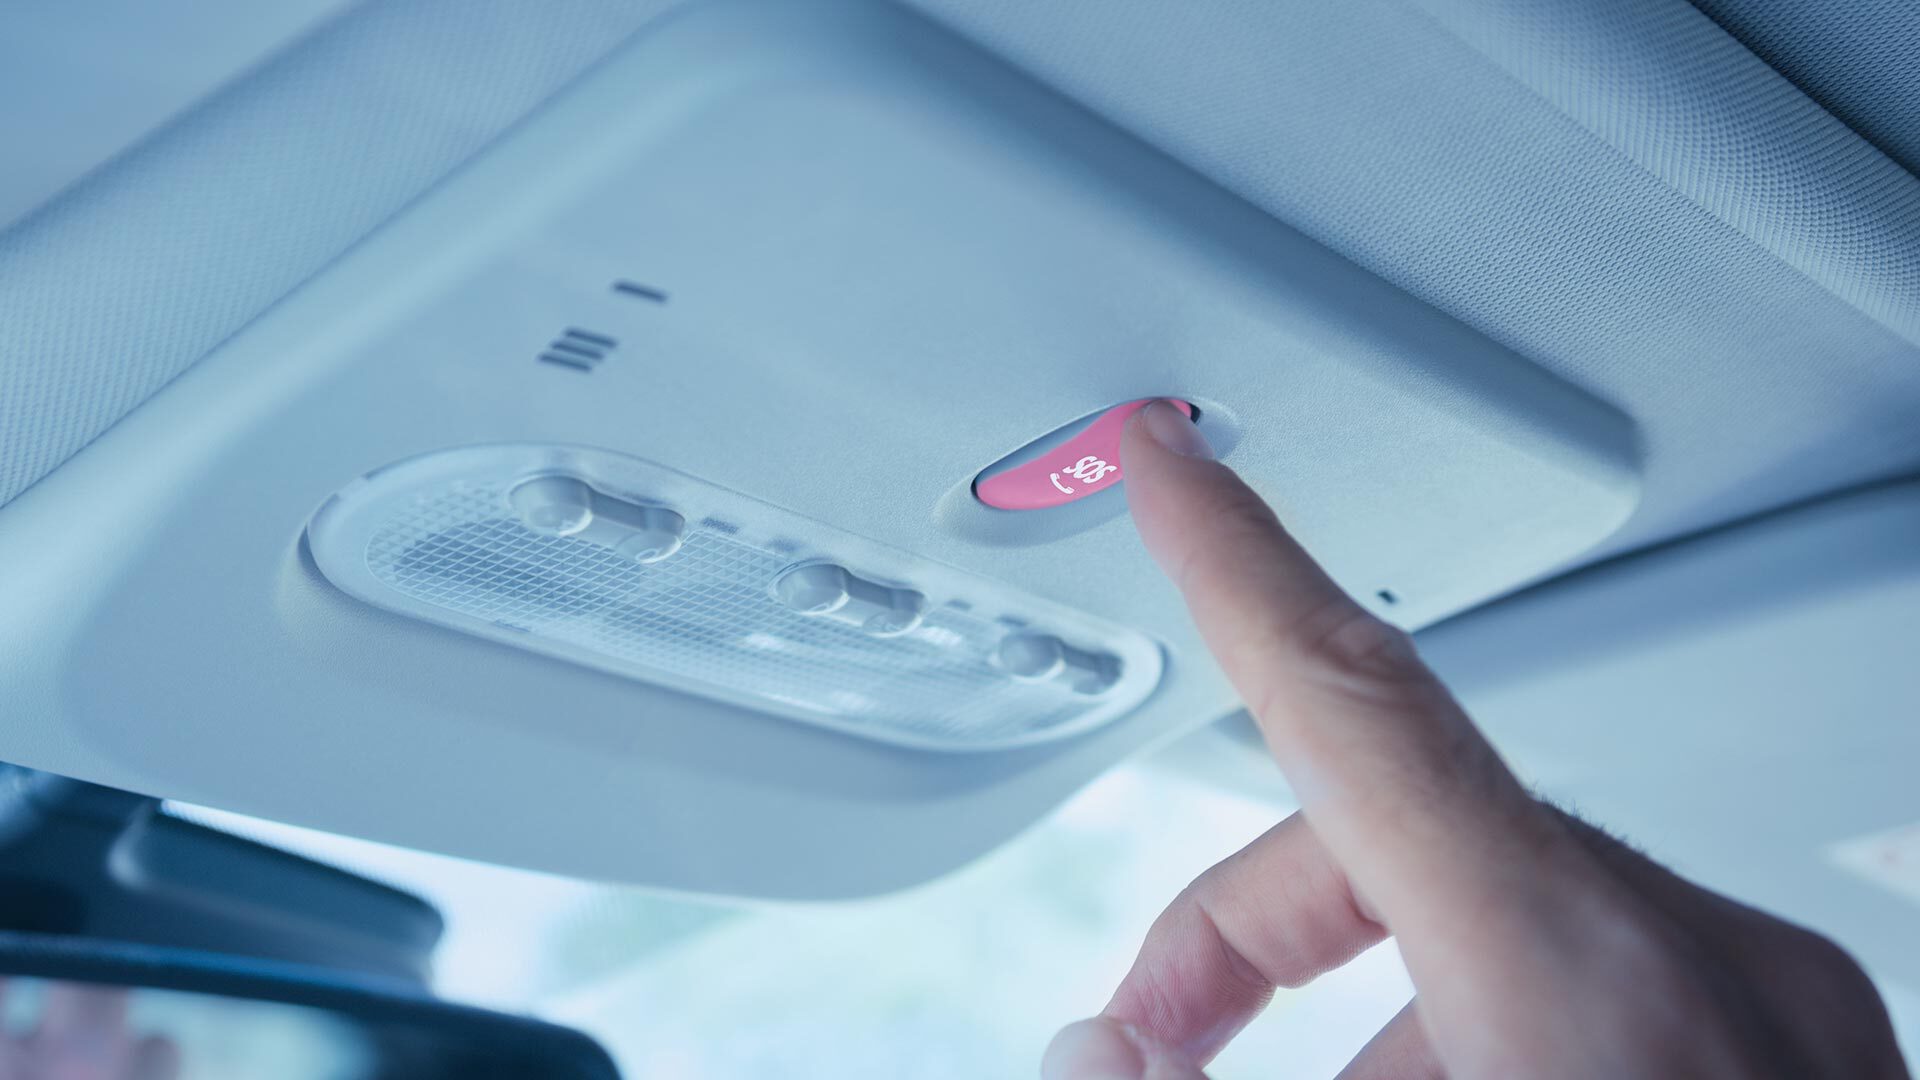 Hand pressing a car emergency button